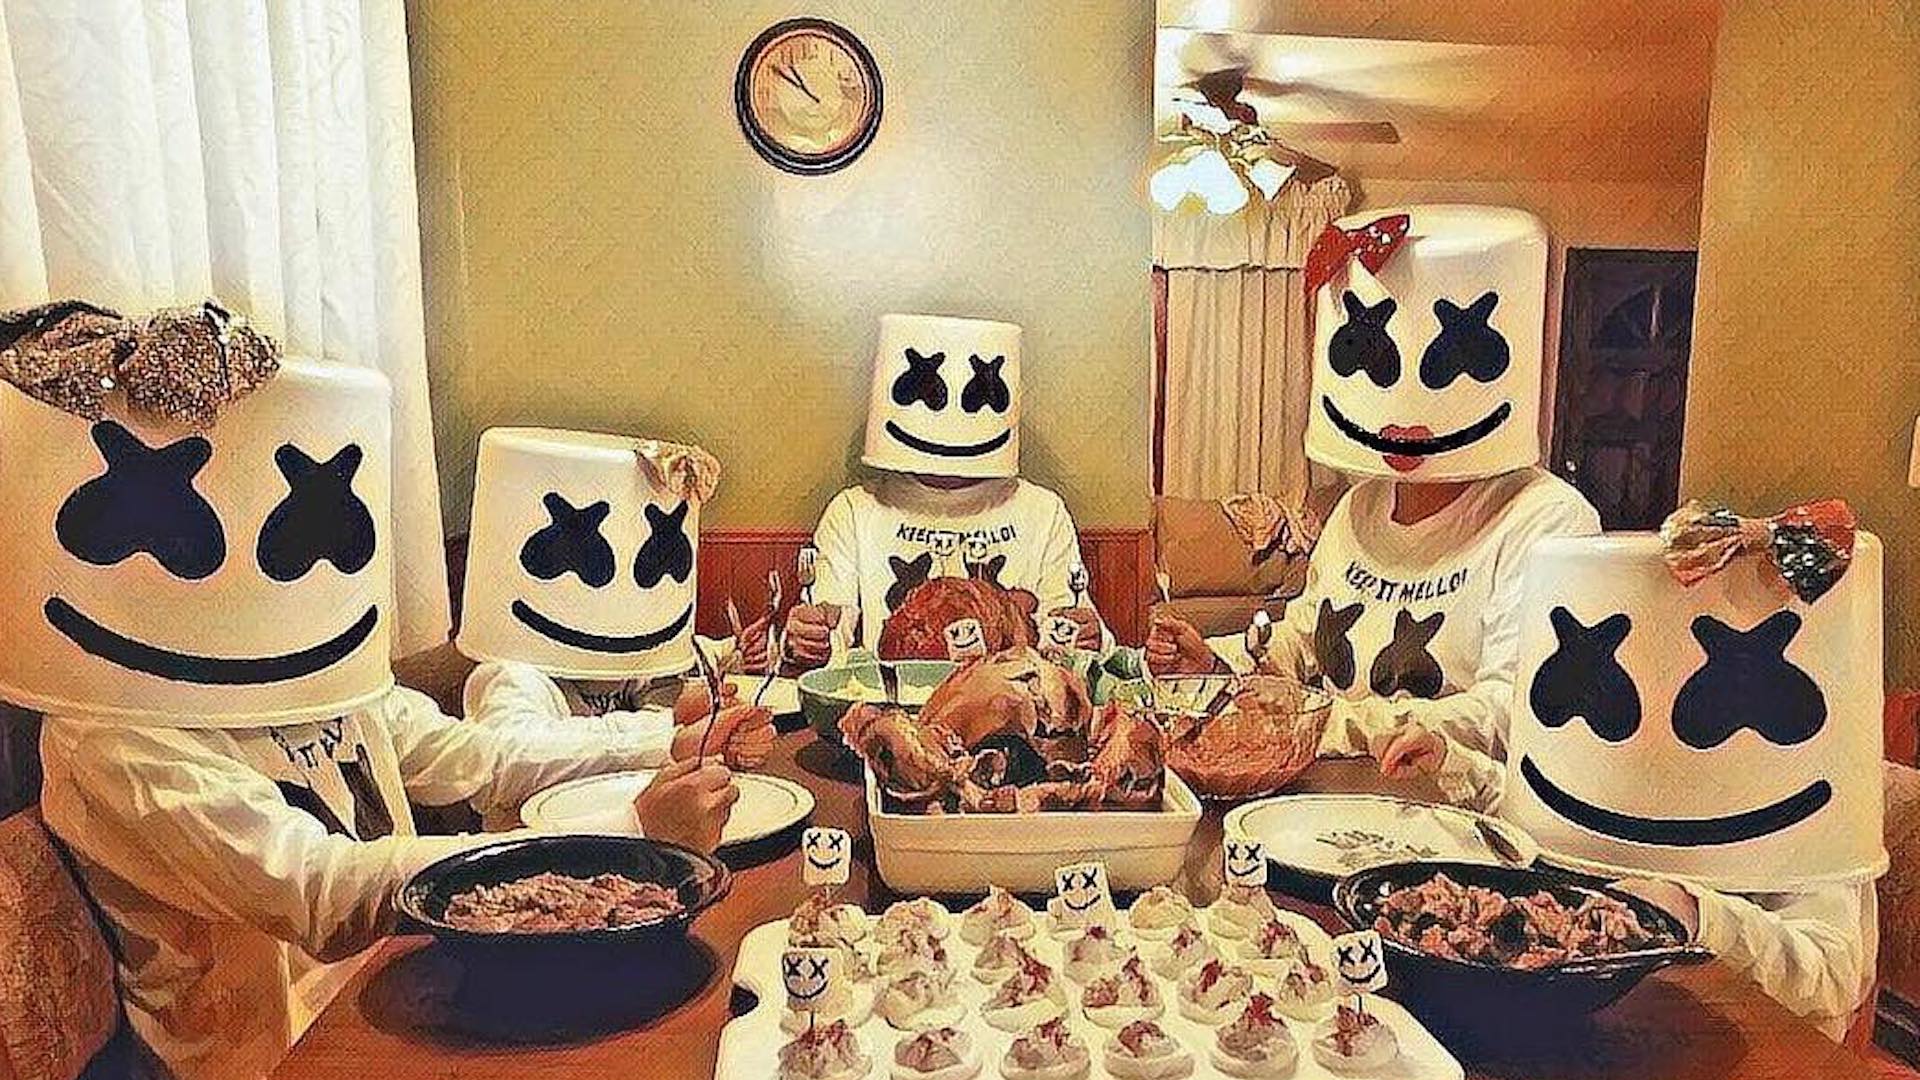 DJ Marshmello and family have a Sunday dinner